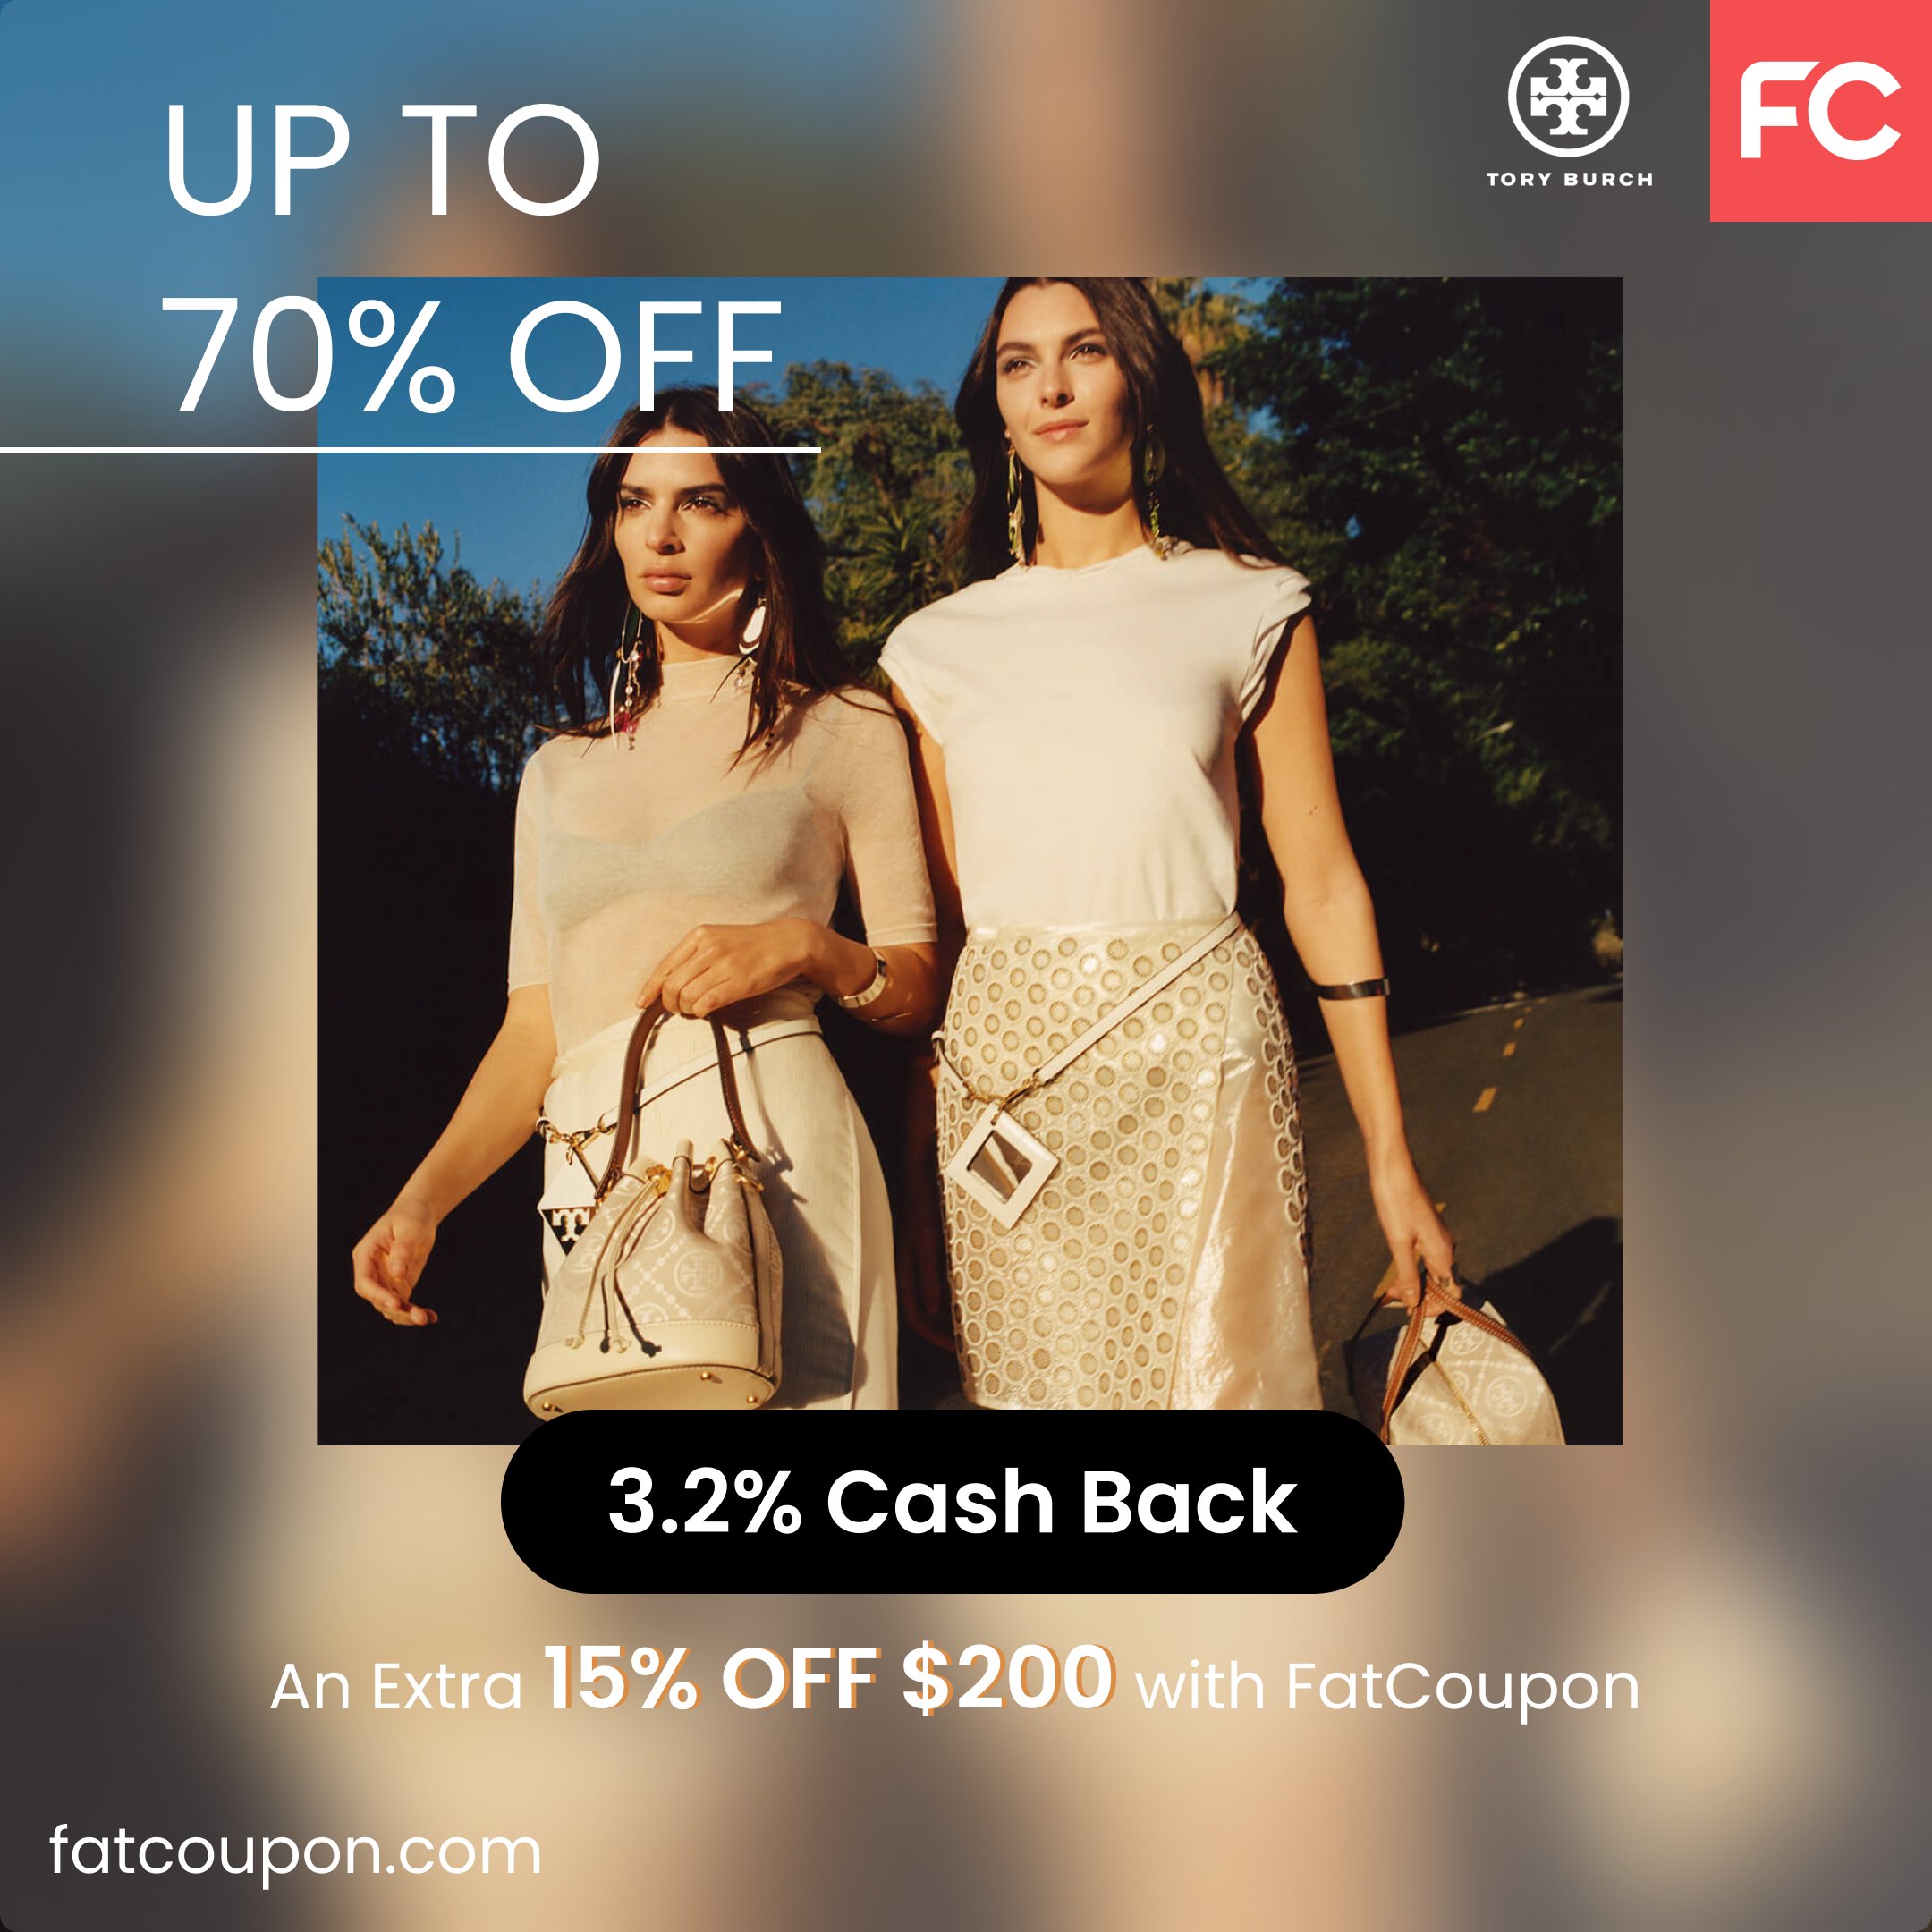 FatCoupon Cash Back & Promo Codes (@fatcoupon) / Twitter